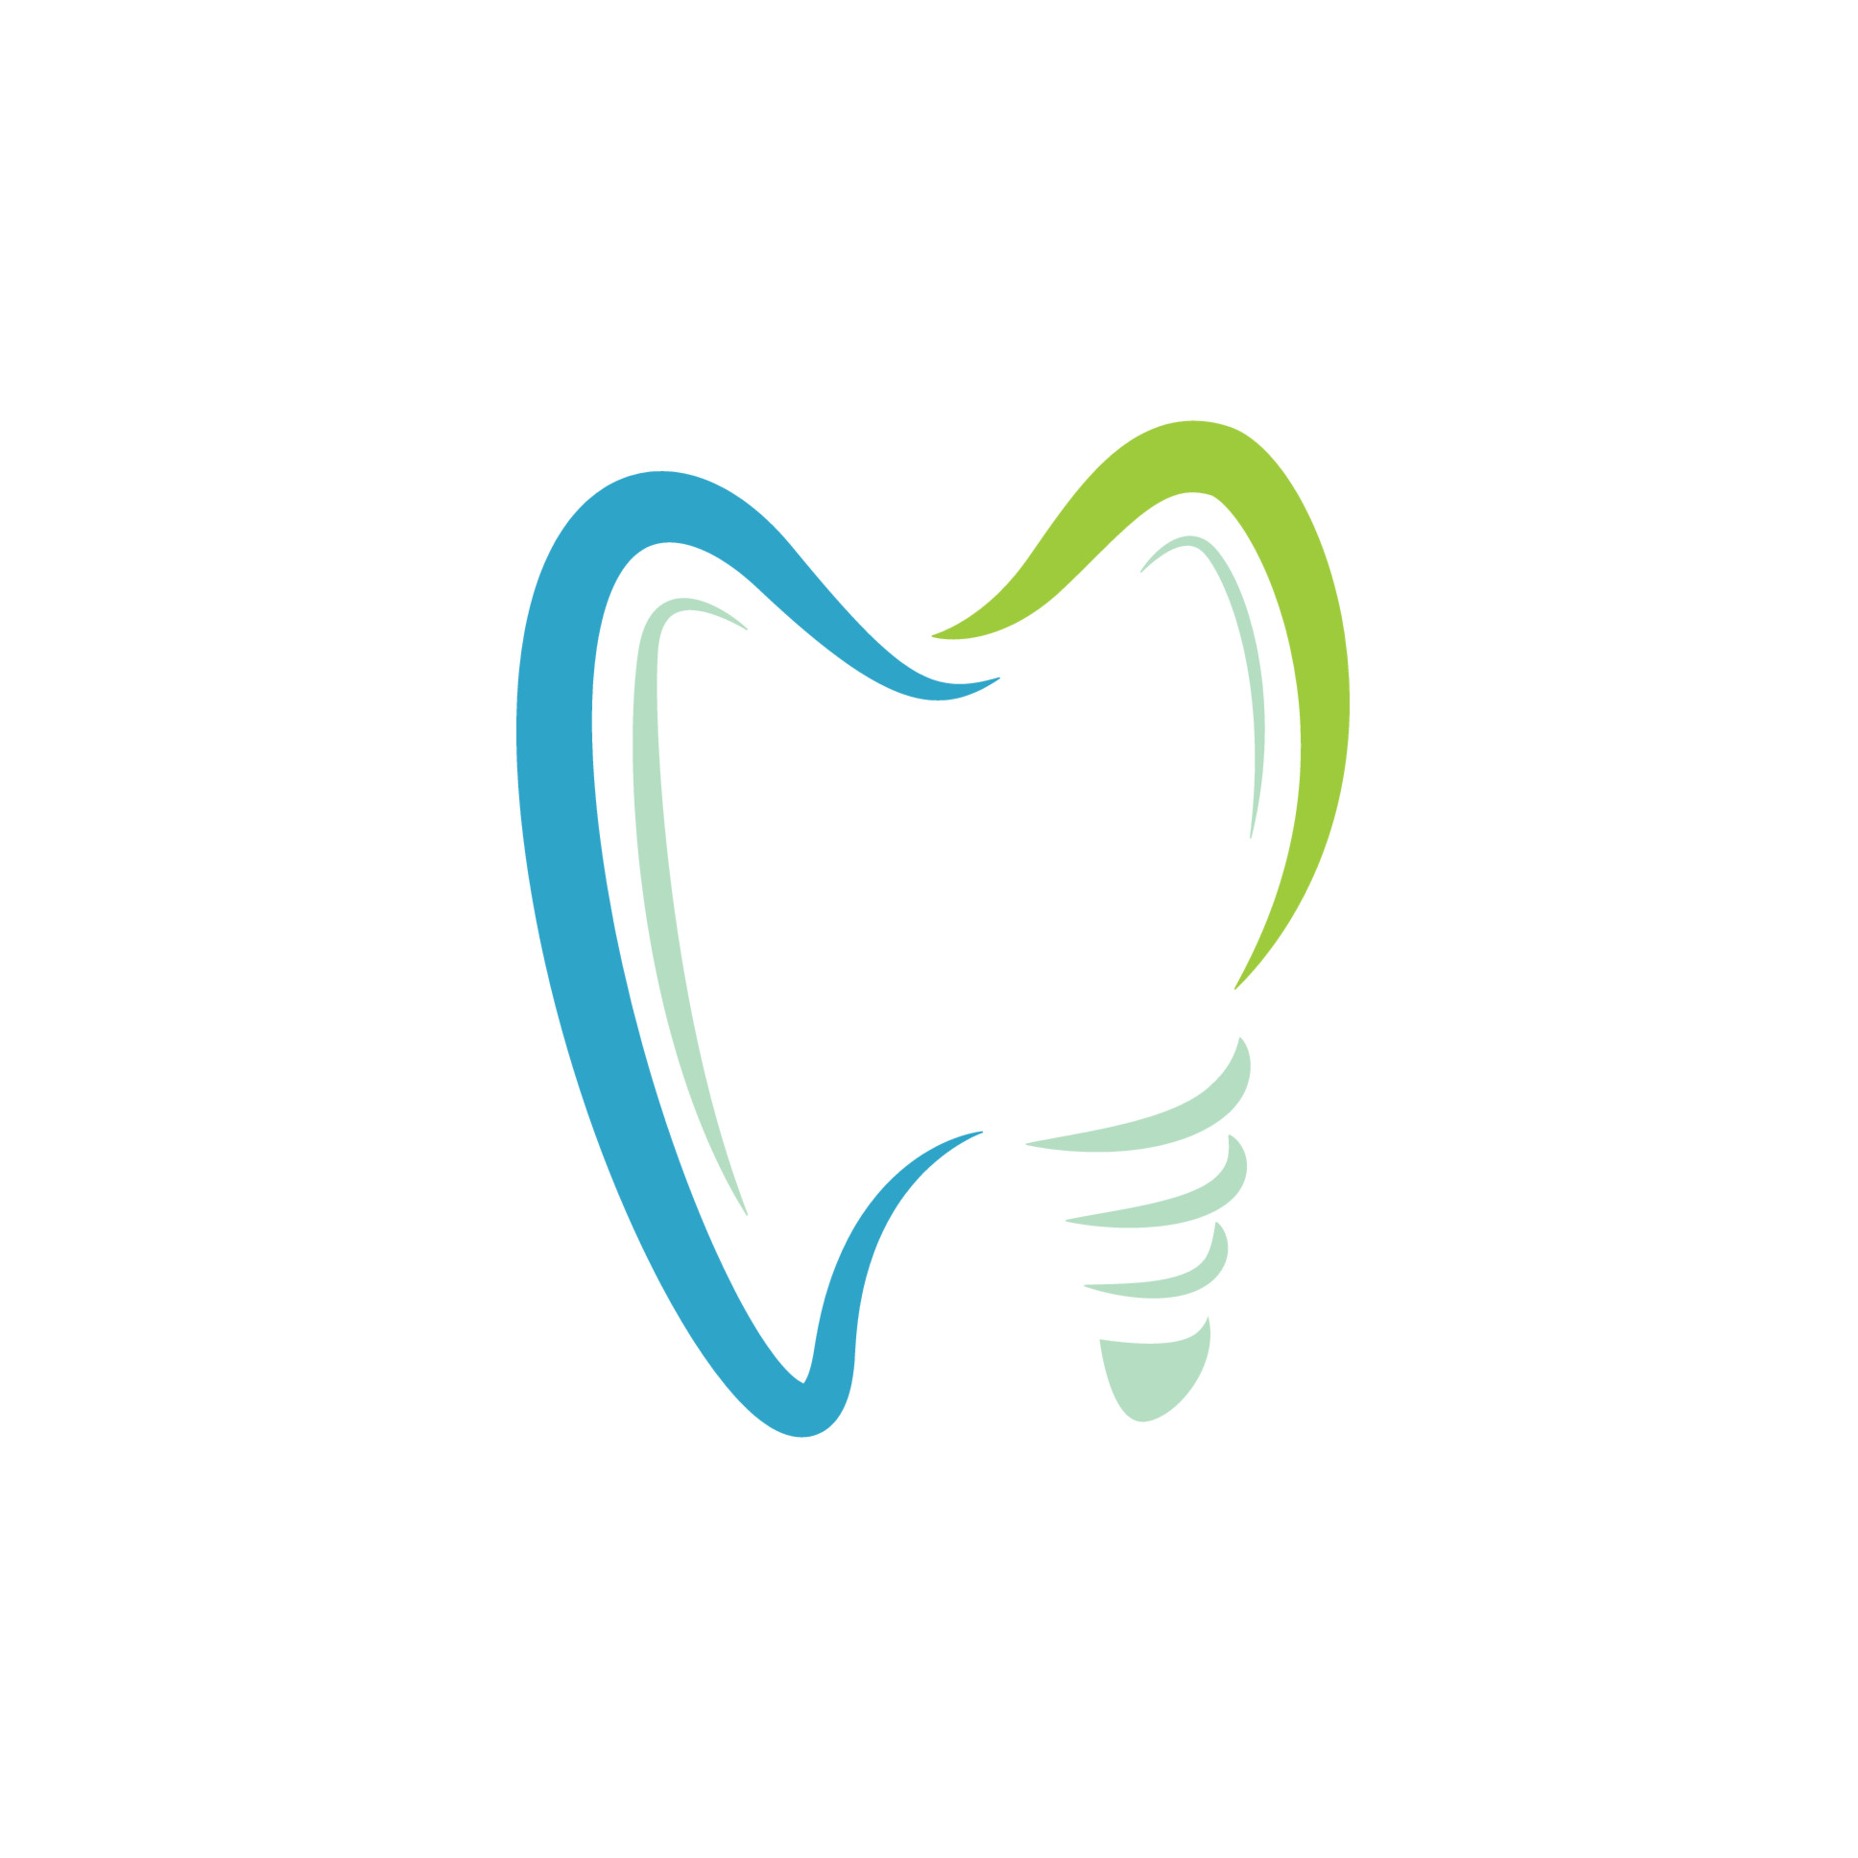 عصب کشی دندان دو کاناله با ترمیم